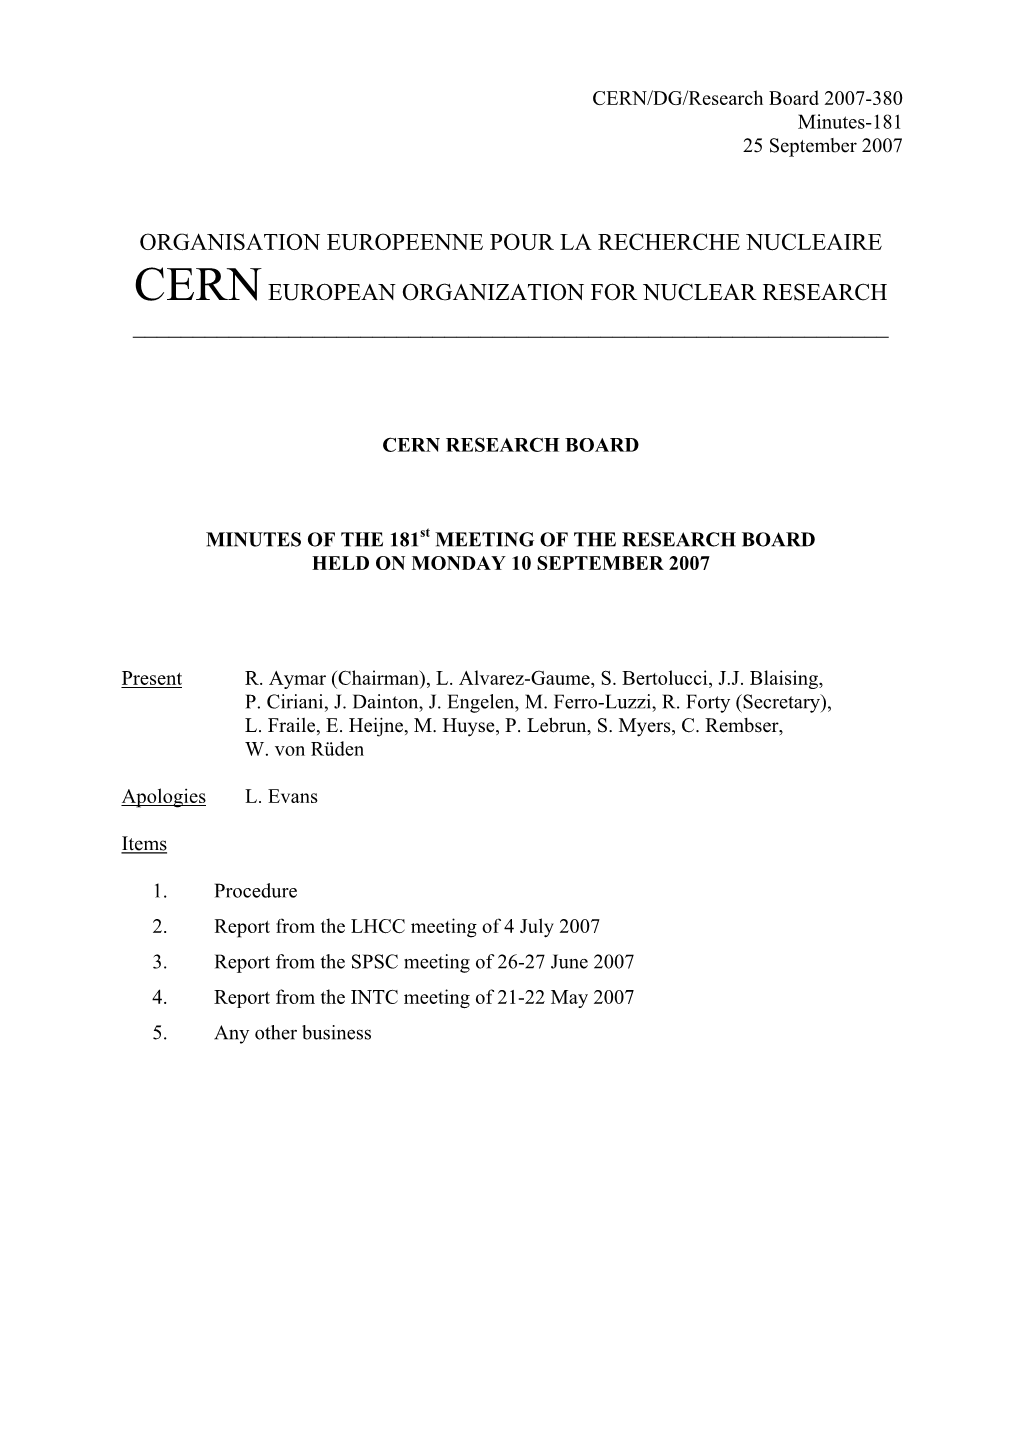 Organisation Europeenne Pour La Recherche Nucleaire Cern European Organization for Nuclear Research ______